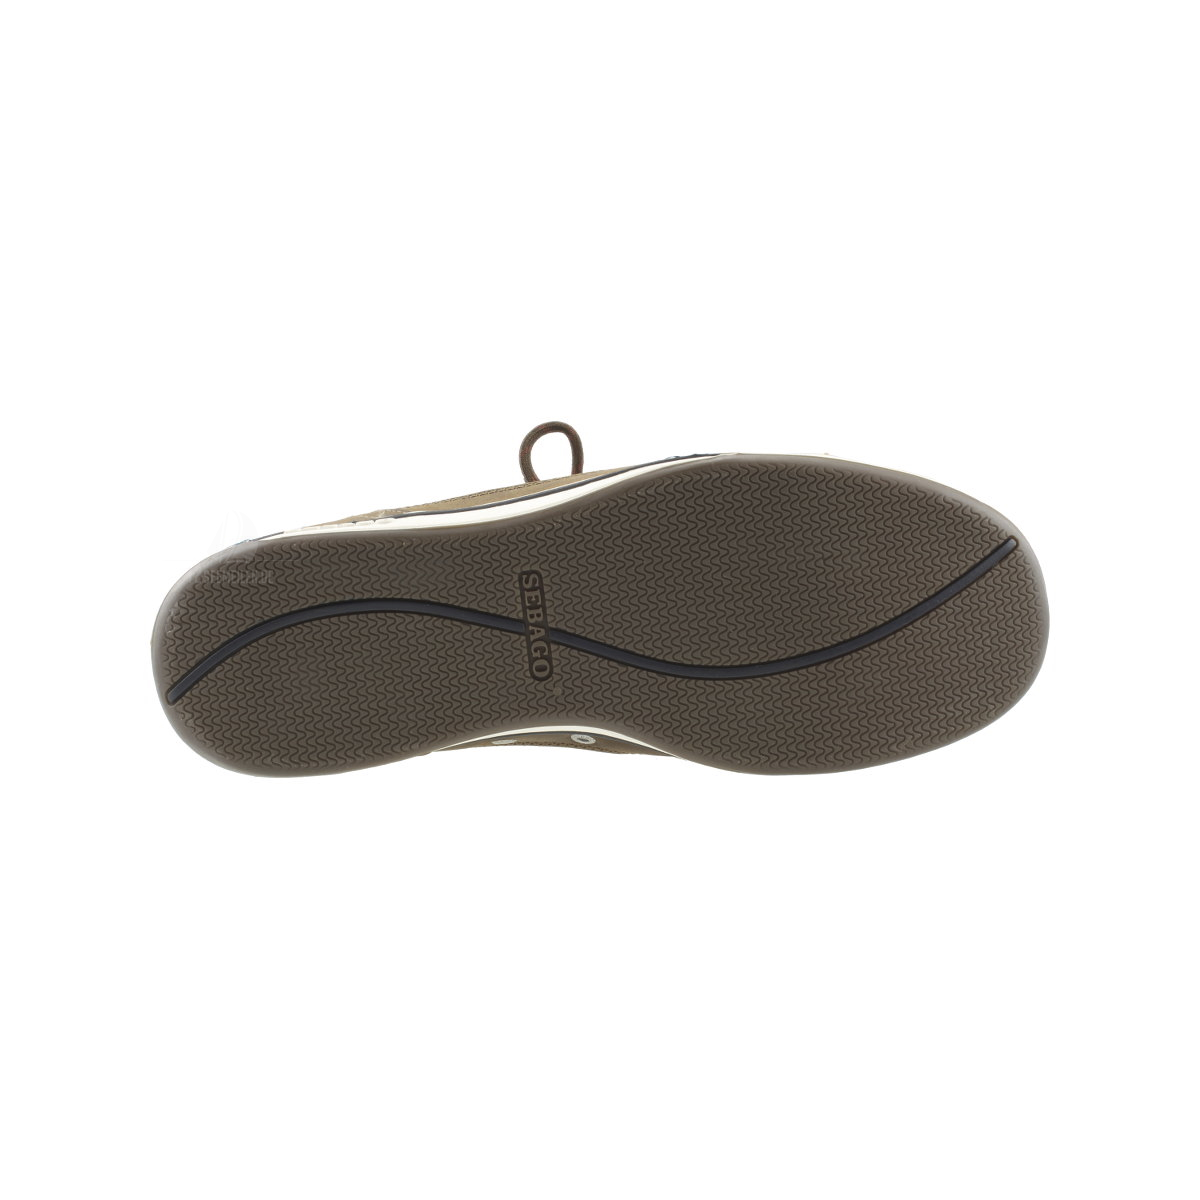 Sebago Triton Three-Eye chaussures bateau homme walnut leather, taille EU 43,5 (US 9,5)